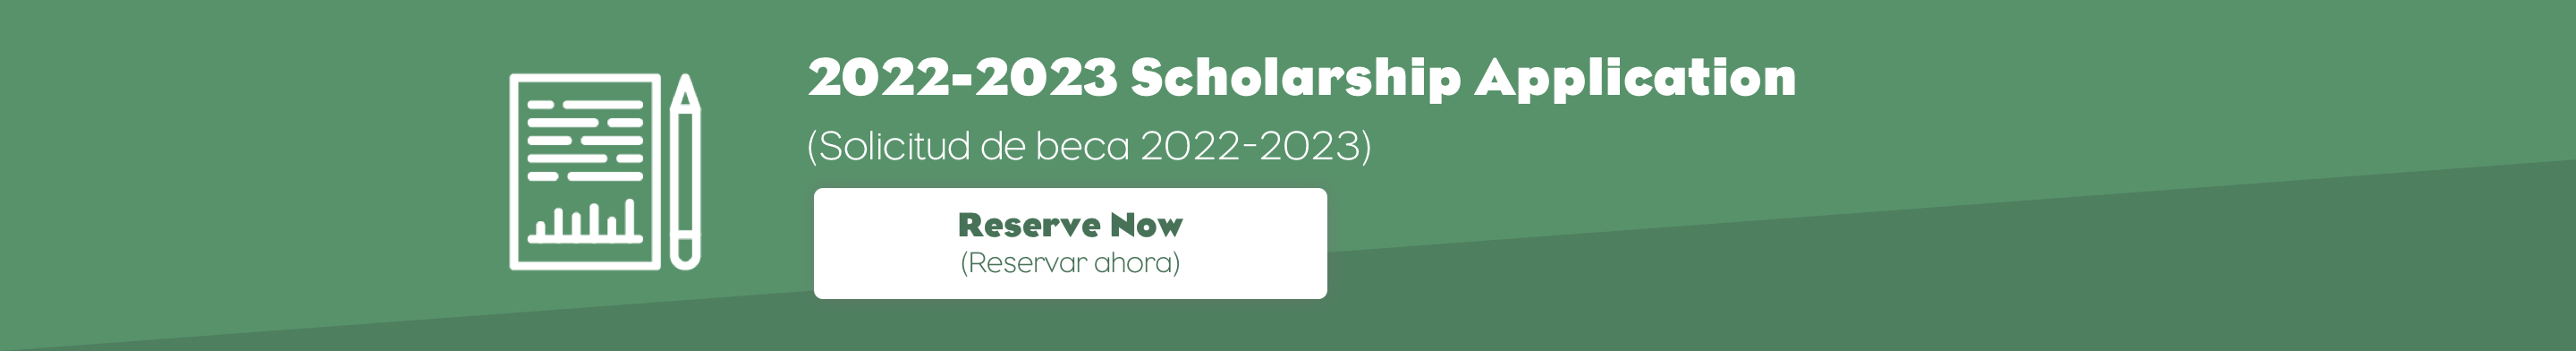 2022-2023 Scholarship Application (Solicitud de beca 2022-2023) Reserve Now (Reservar ahora)